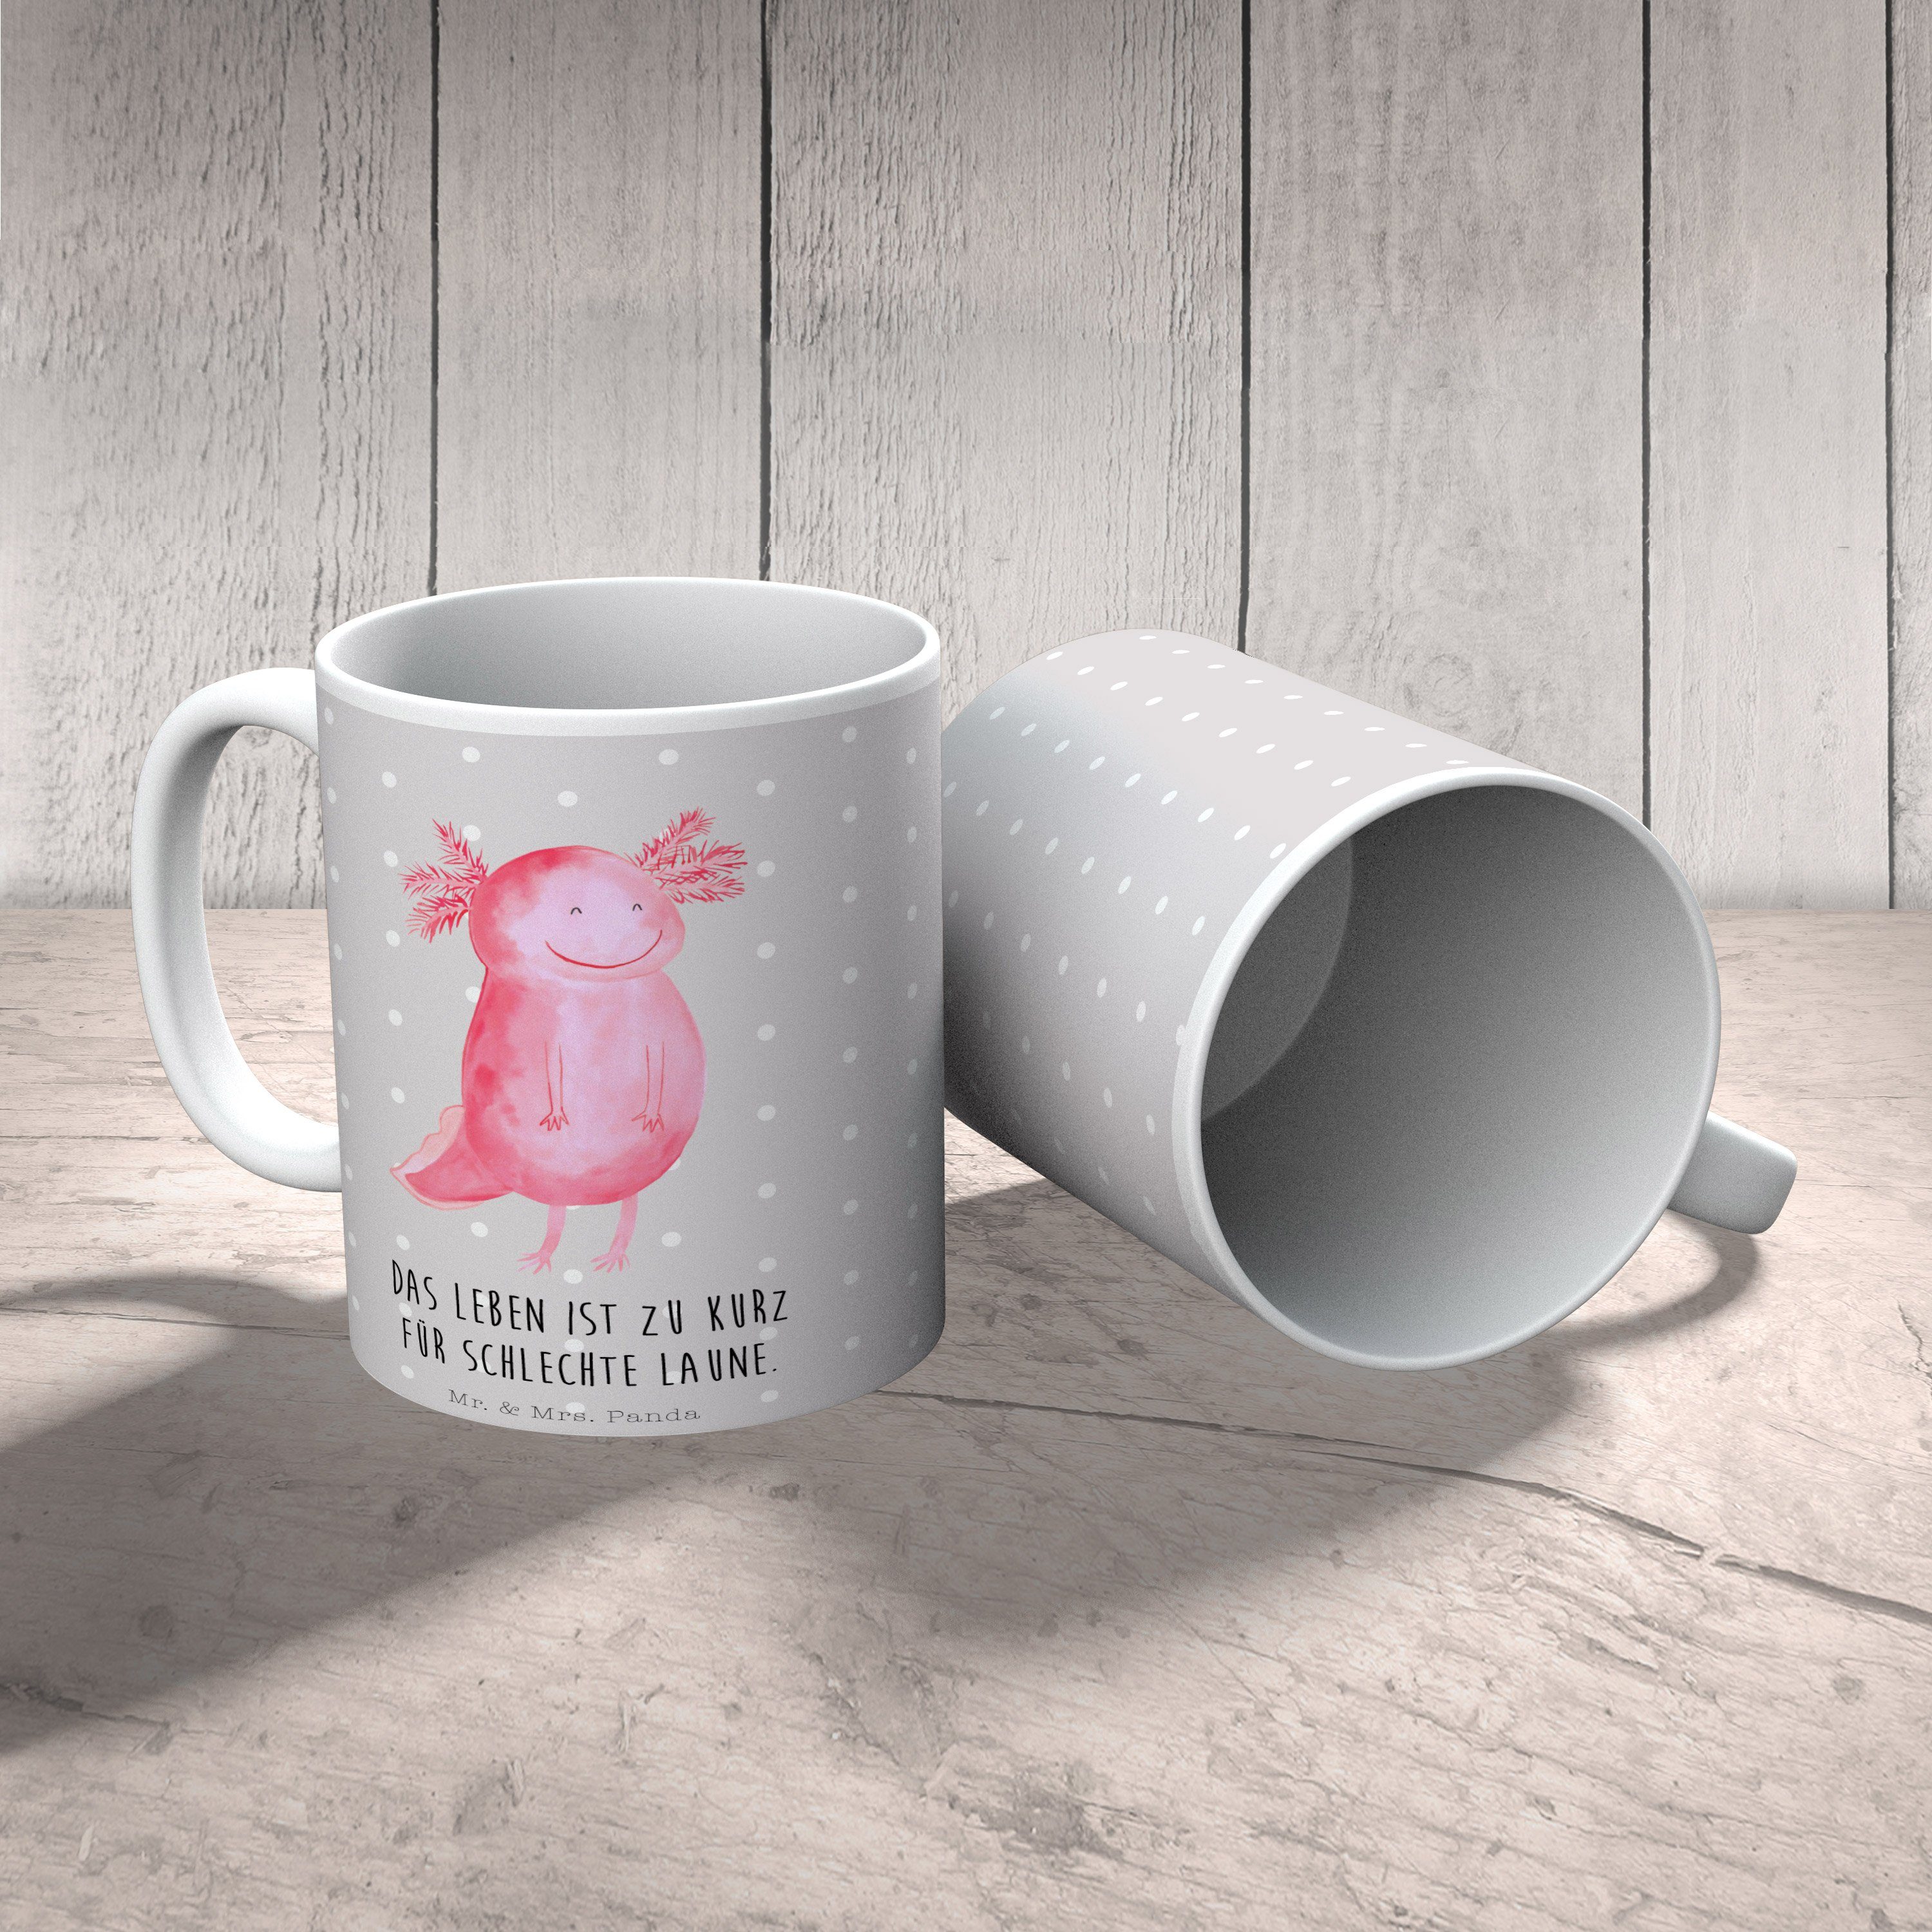 Mr. & Mrs. Panda Keramik Tasse Pastell Axolotl glücklich Motive, - Grau - Tasse Ke, Geschenk, Lurche